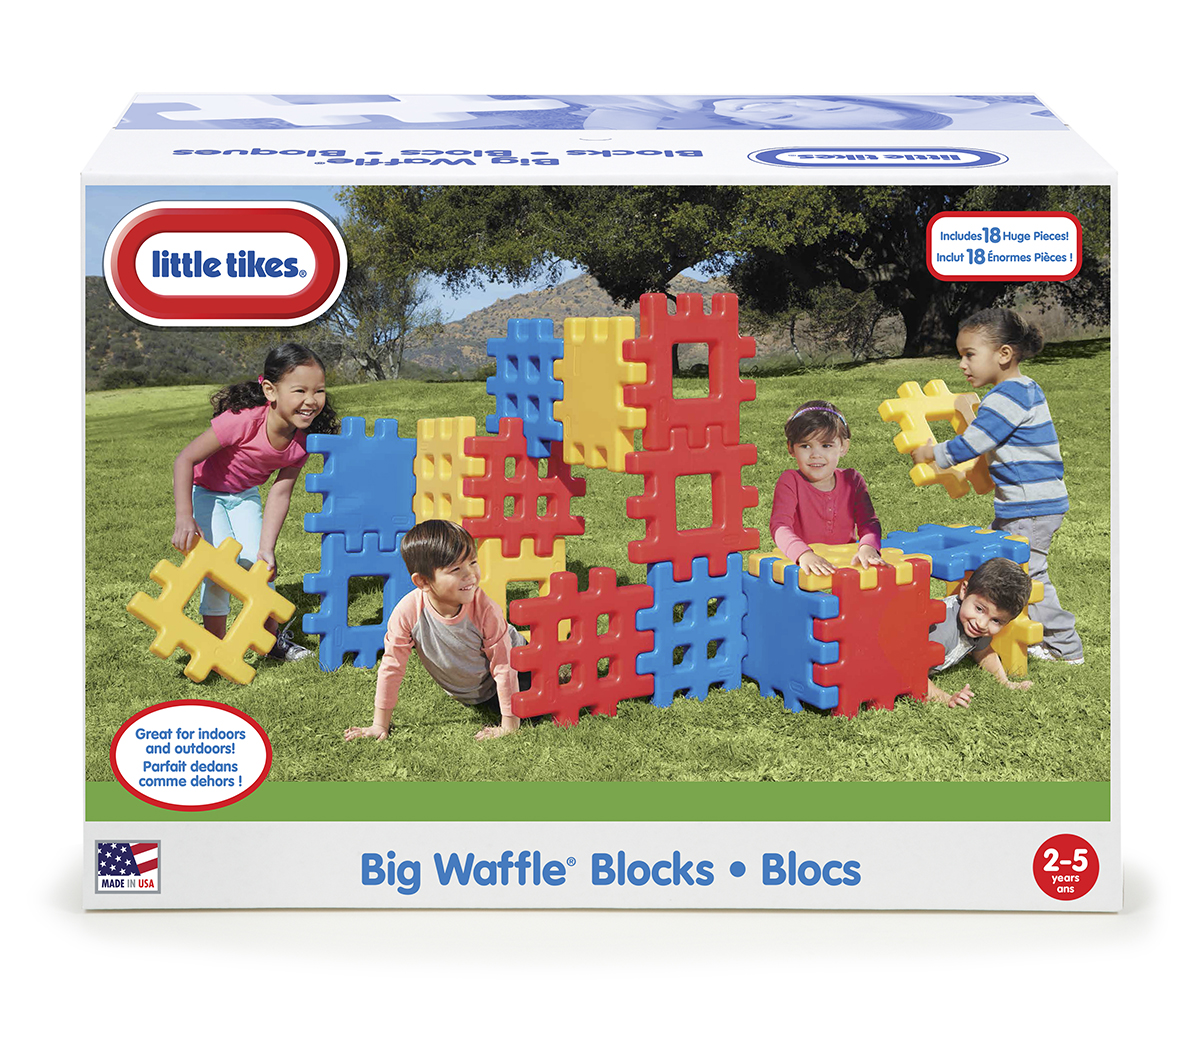 small blocks for kids